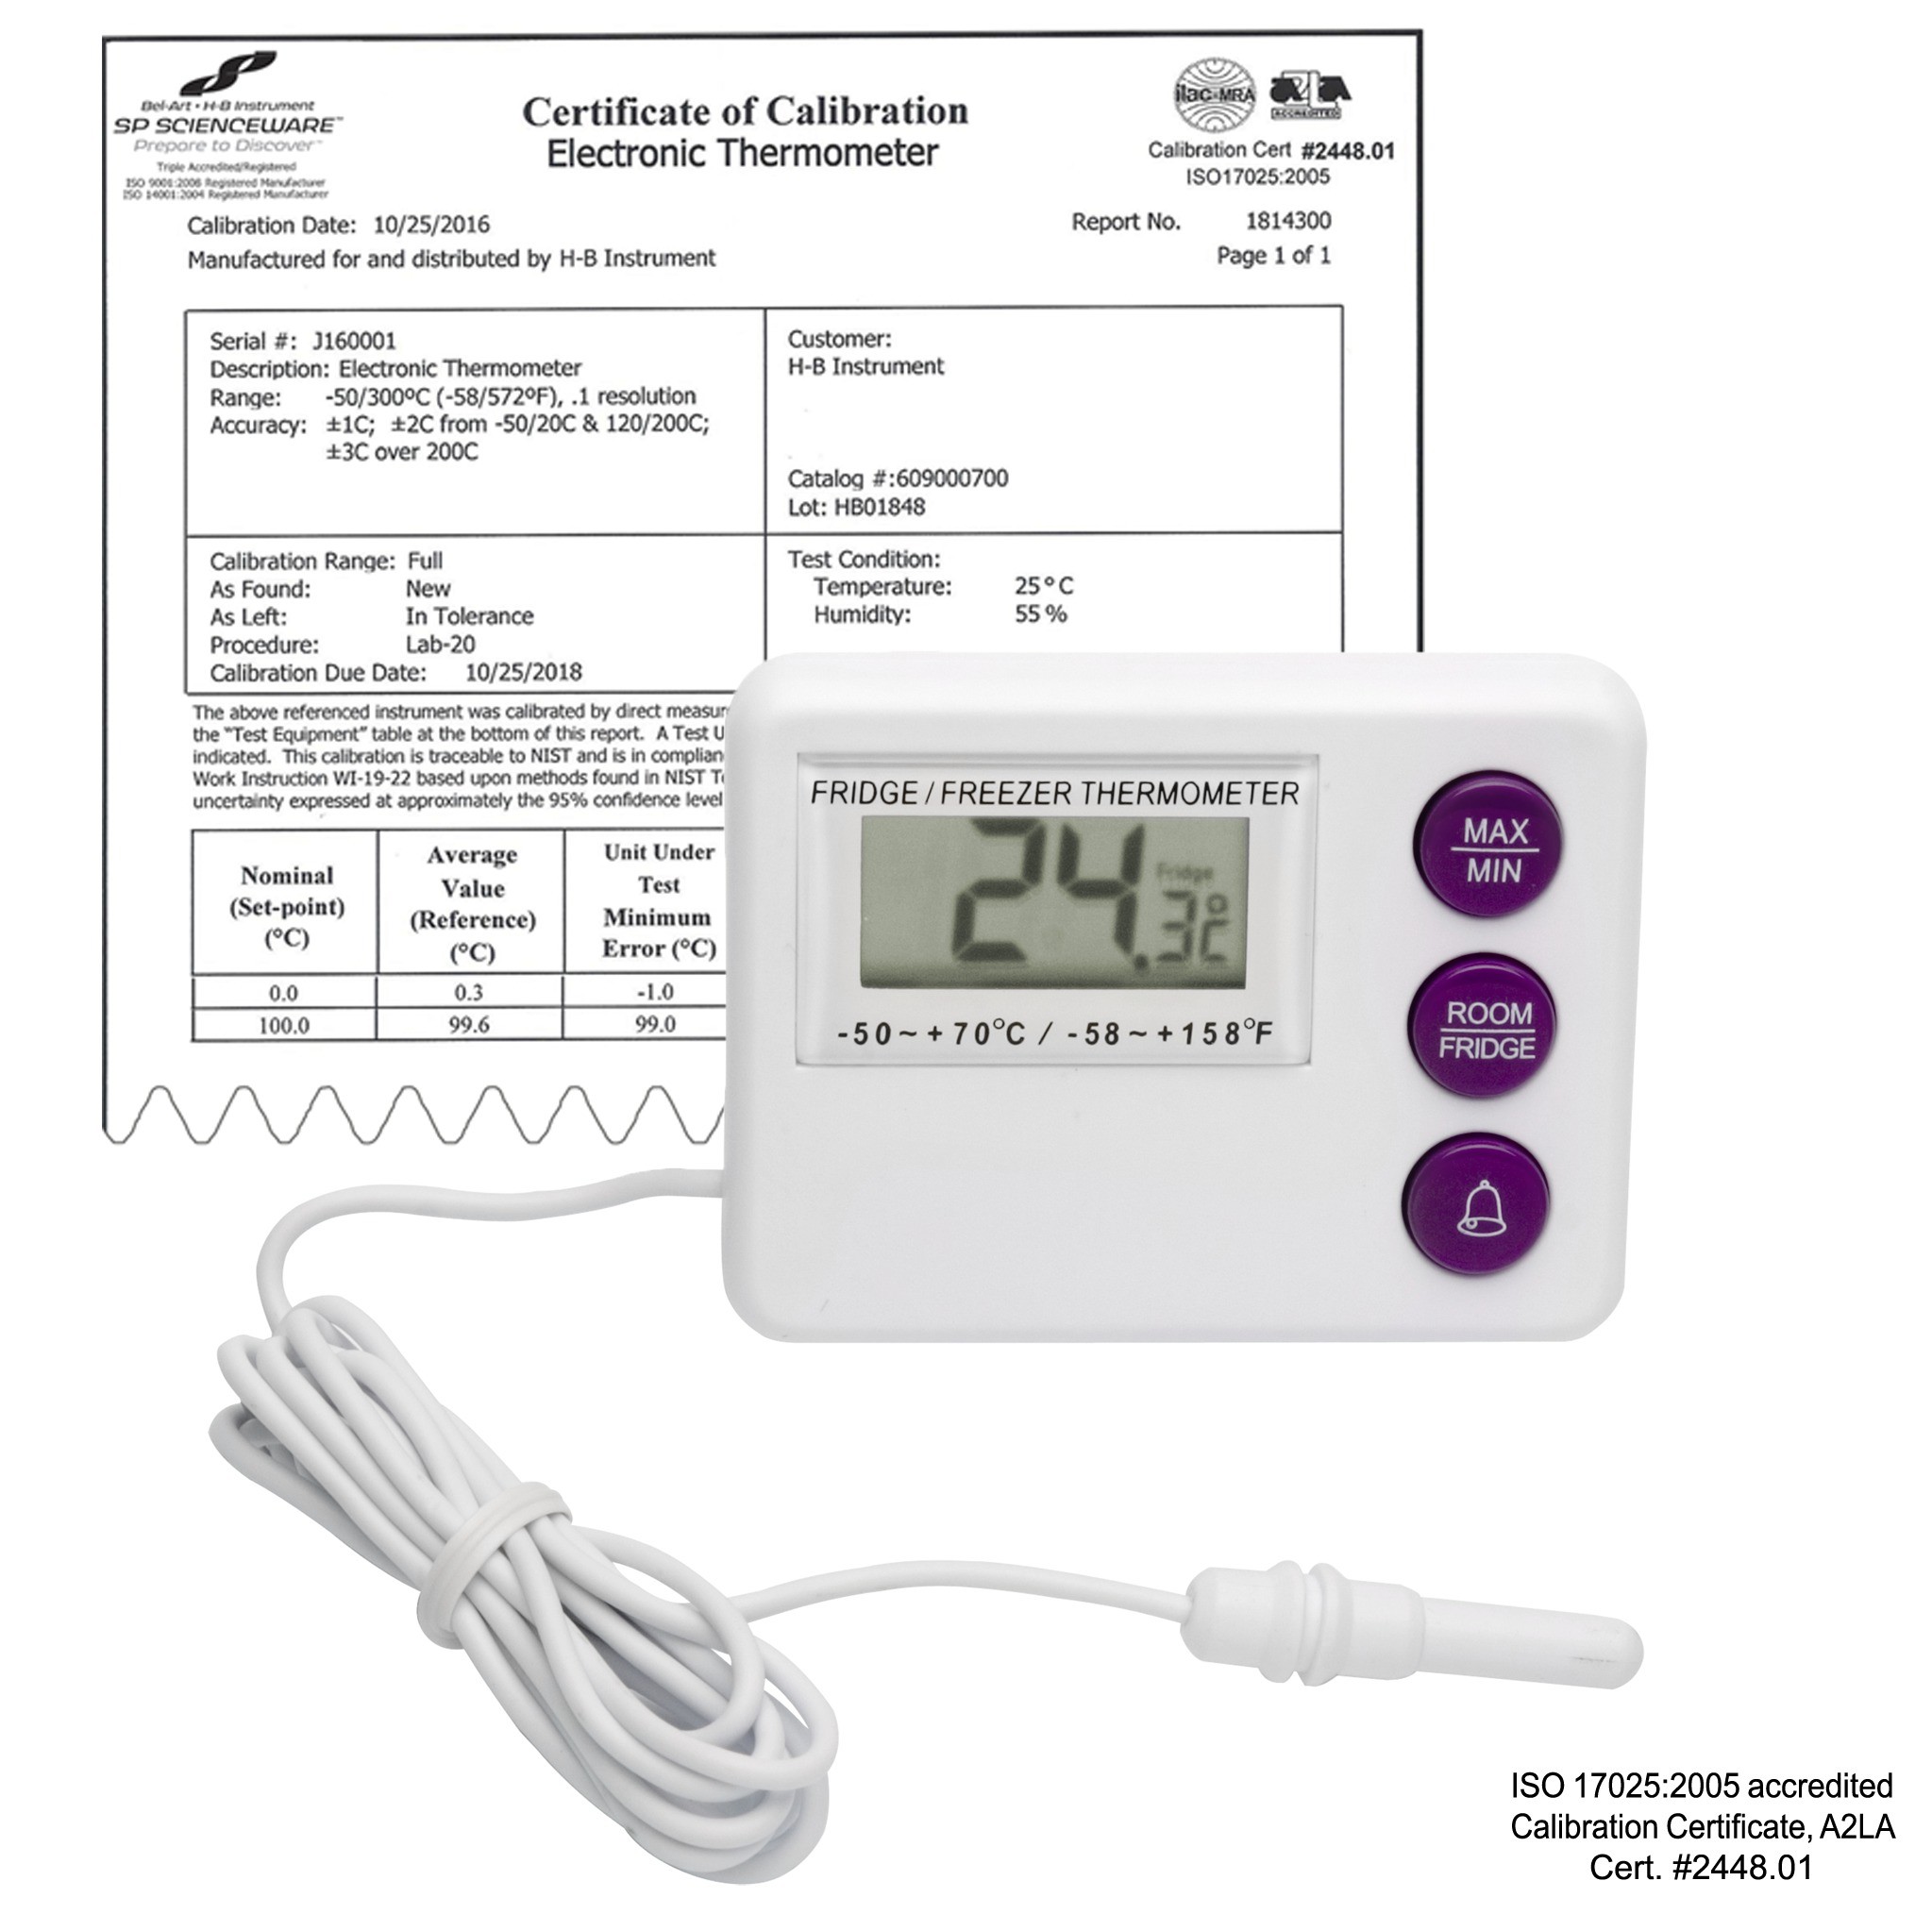 Incubator MIN-MAX Alarm Digital Bottle Thermometer - NIST